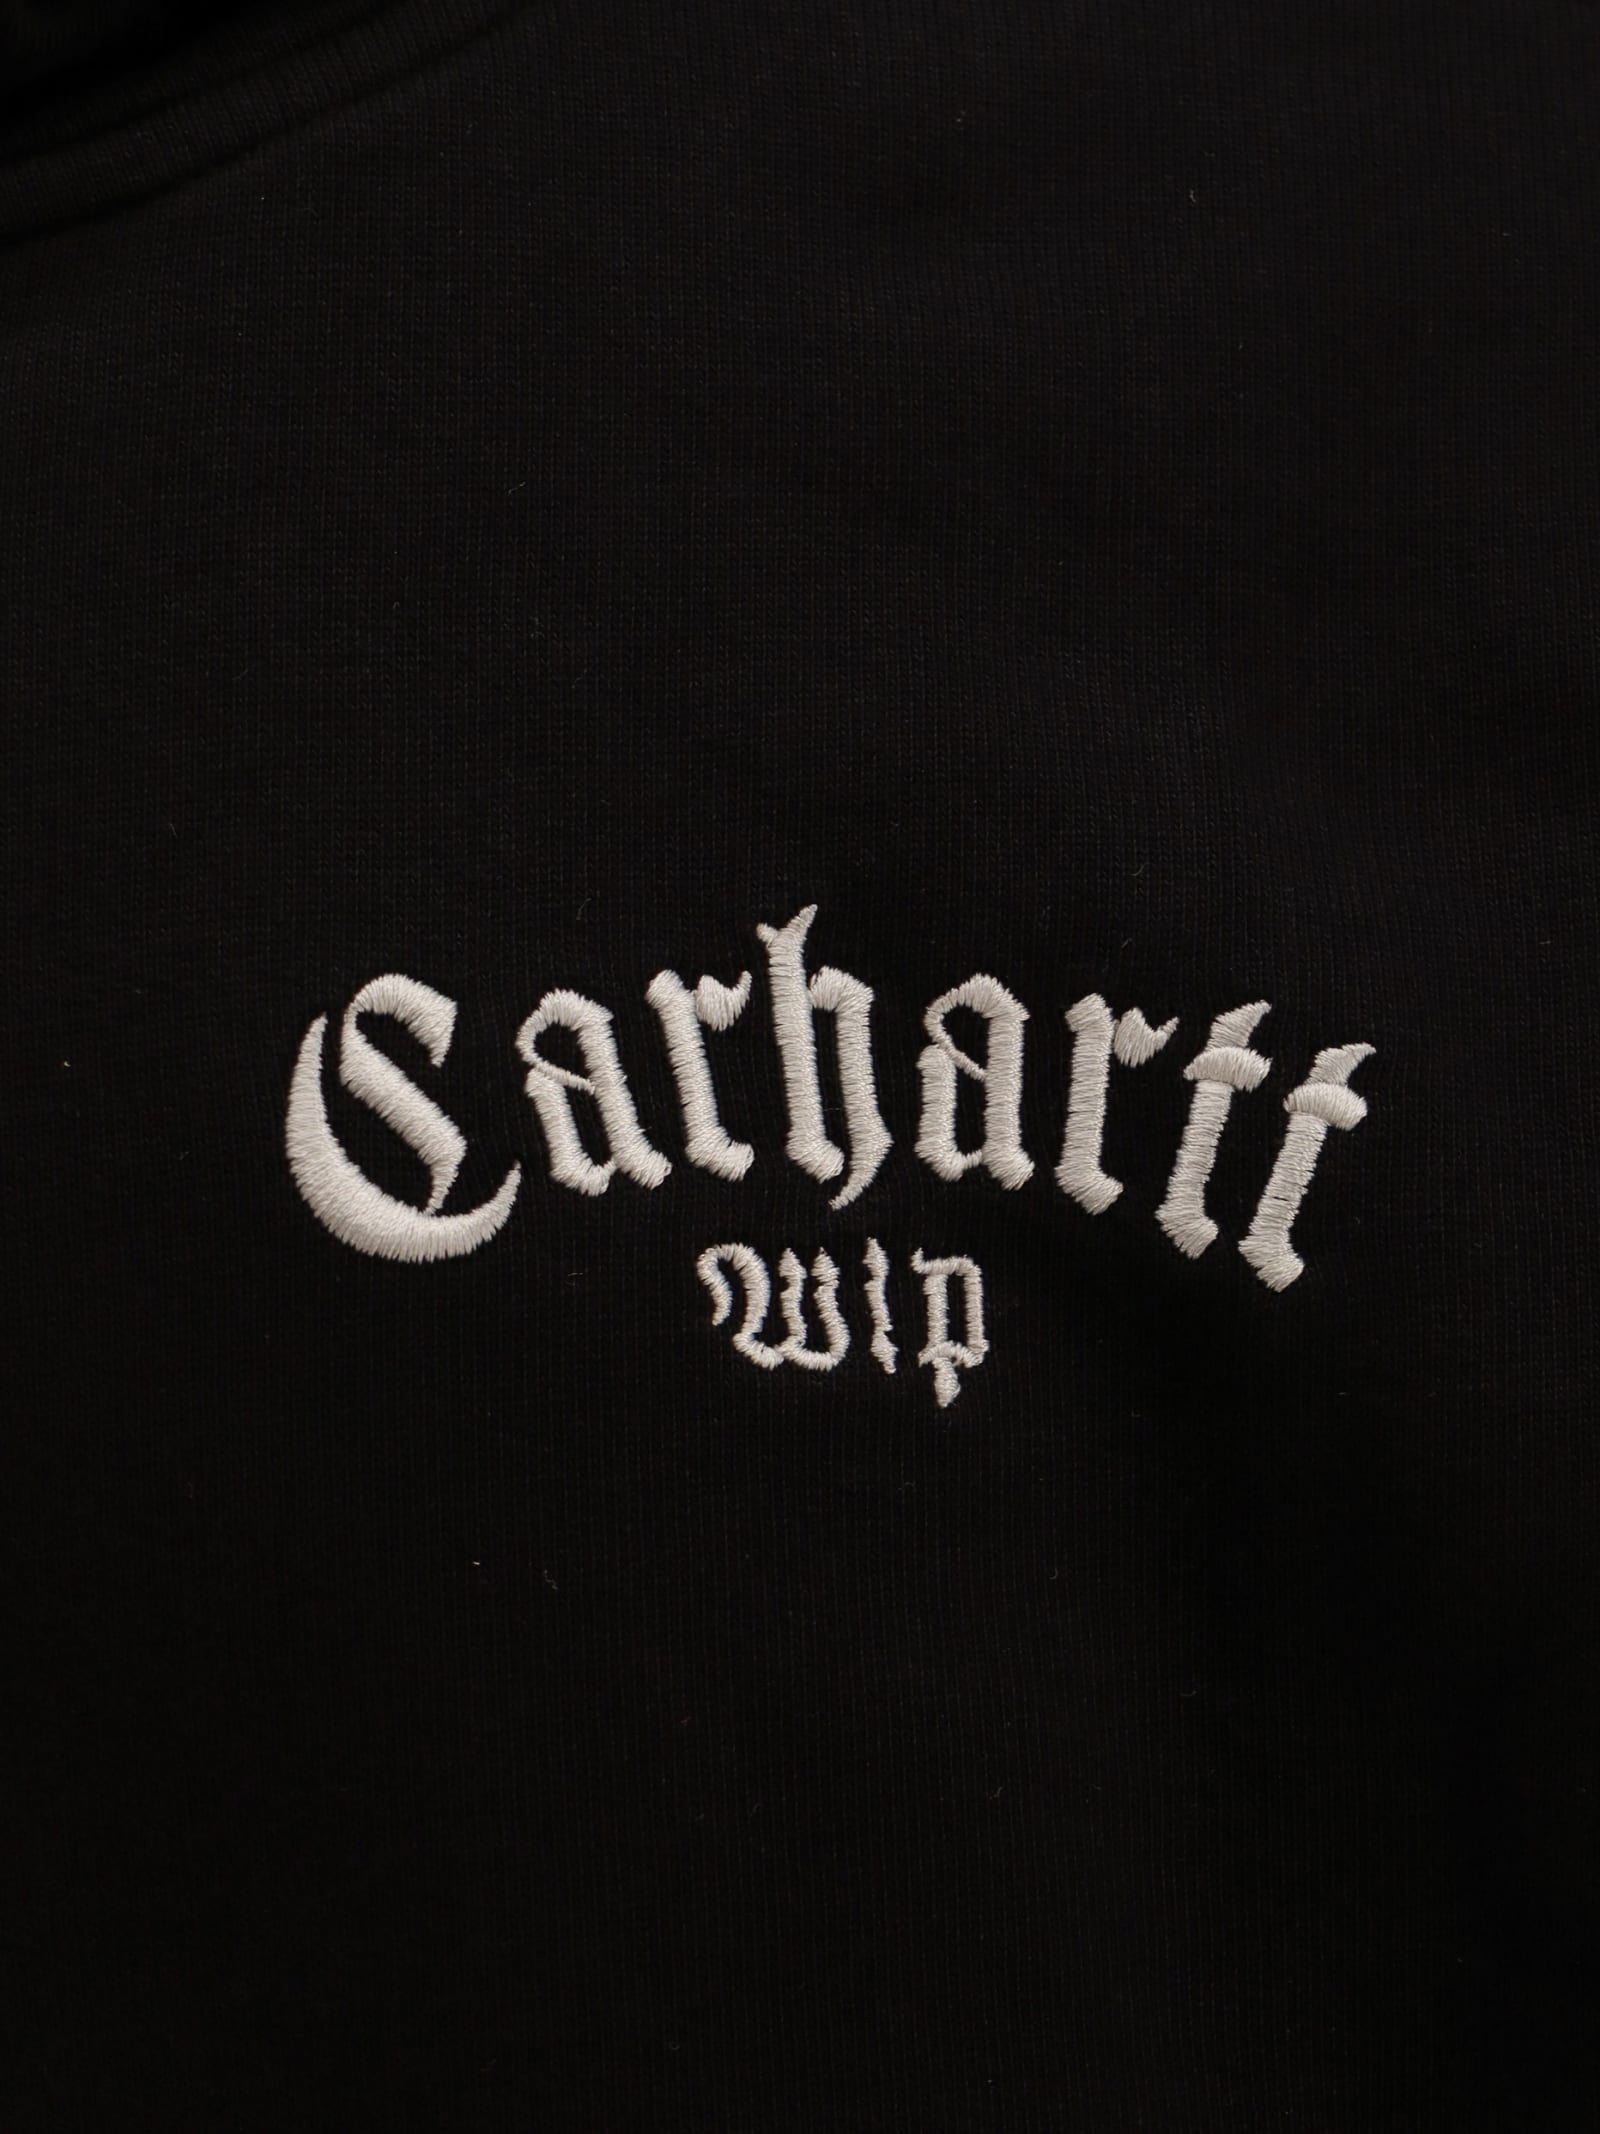 Shop Carhartt Sweatshirt In Black/white